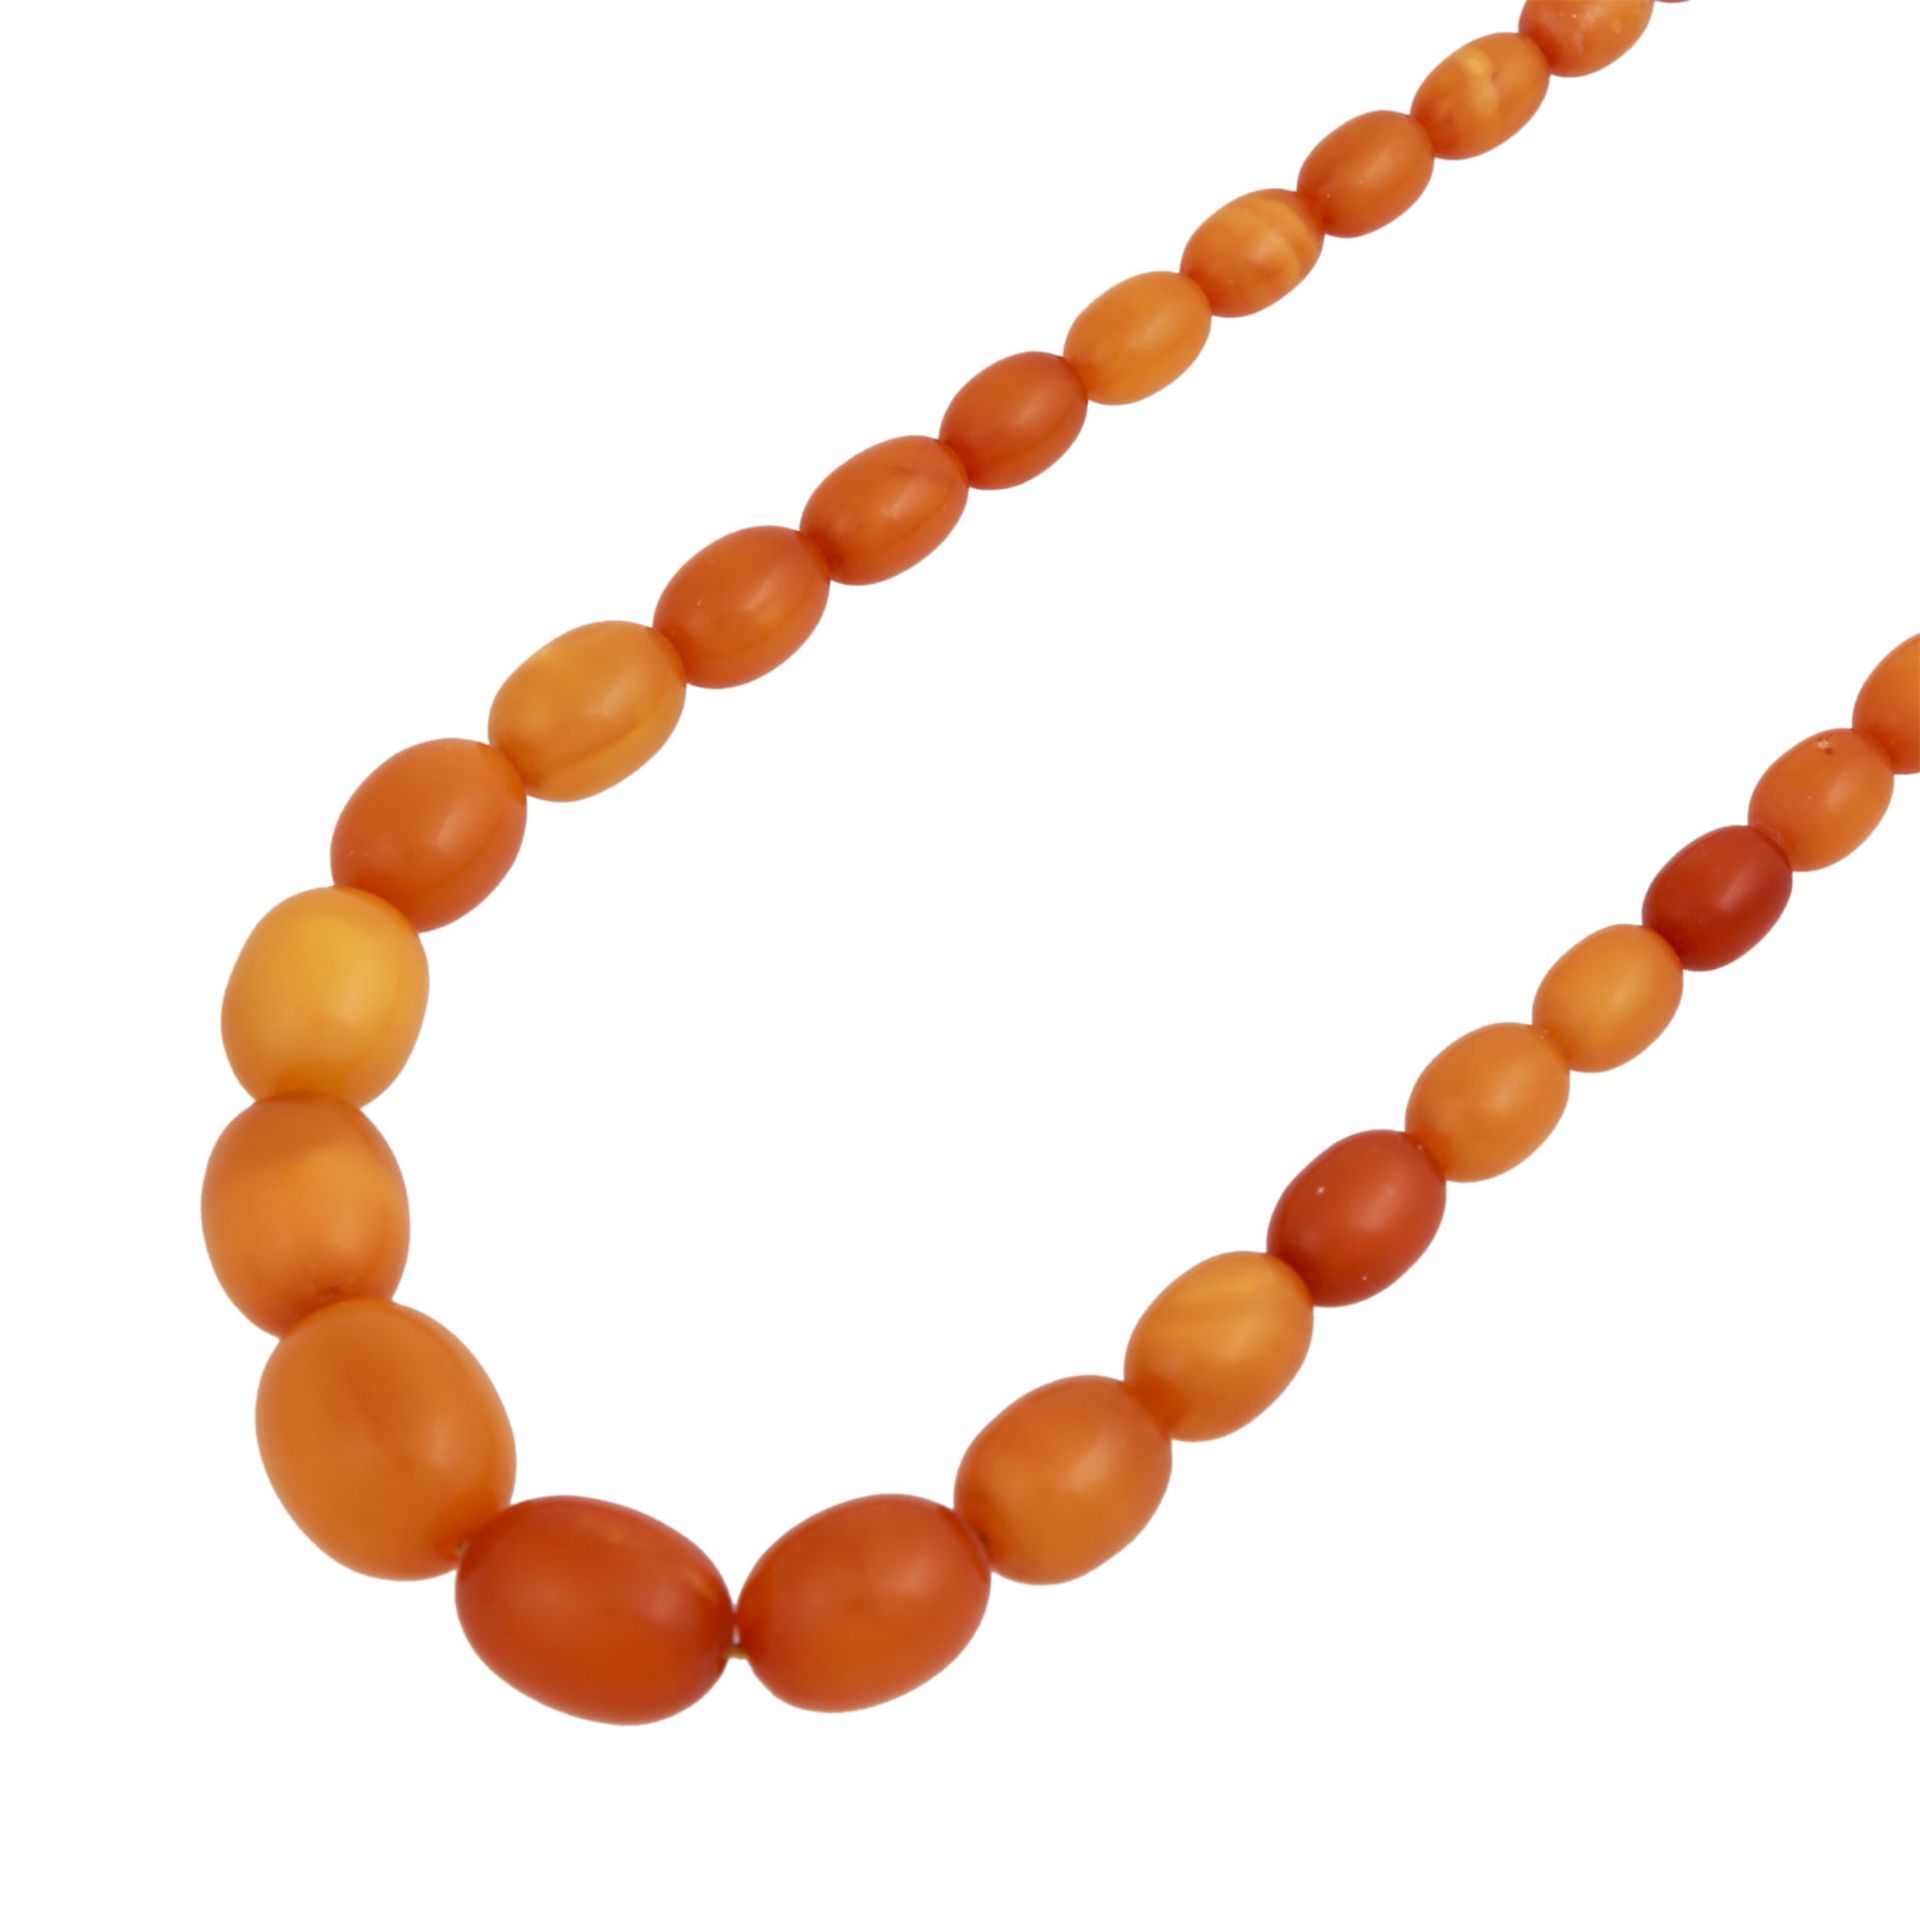 Bernsteinkette, olivenförmig im Verlauf,7-17 mm, L. ca. 50 cm, karamelfarben meliert, Karabiner GG 9 - Image 4 of 4